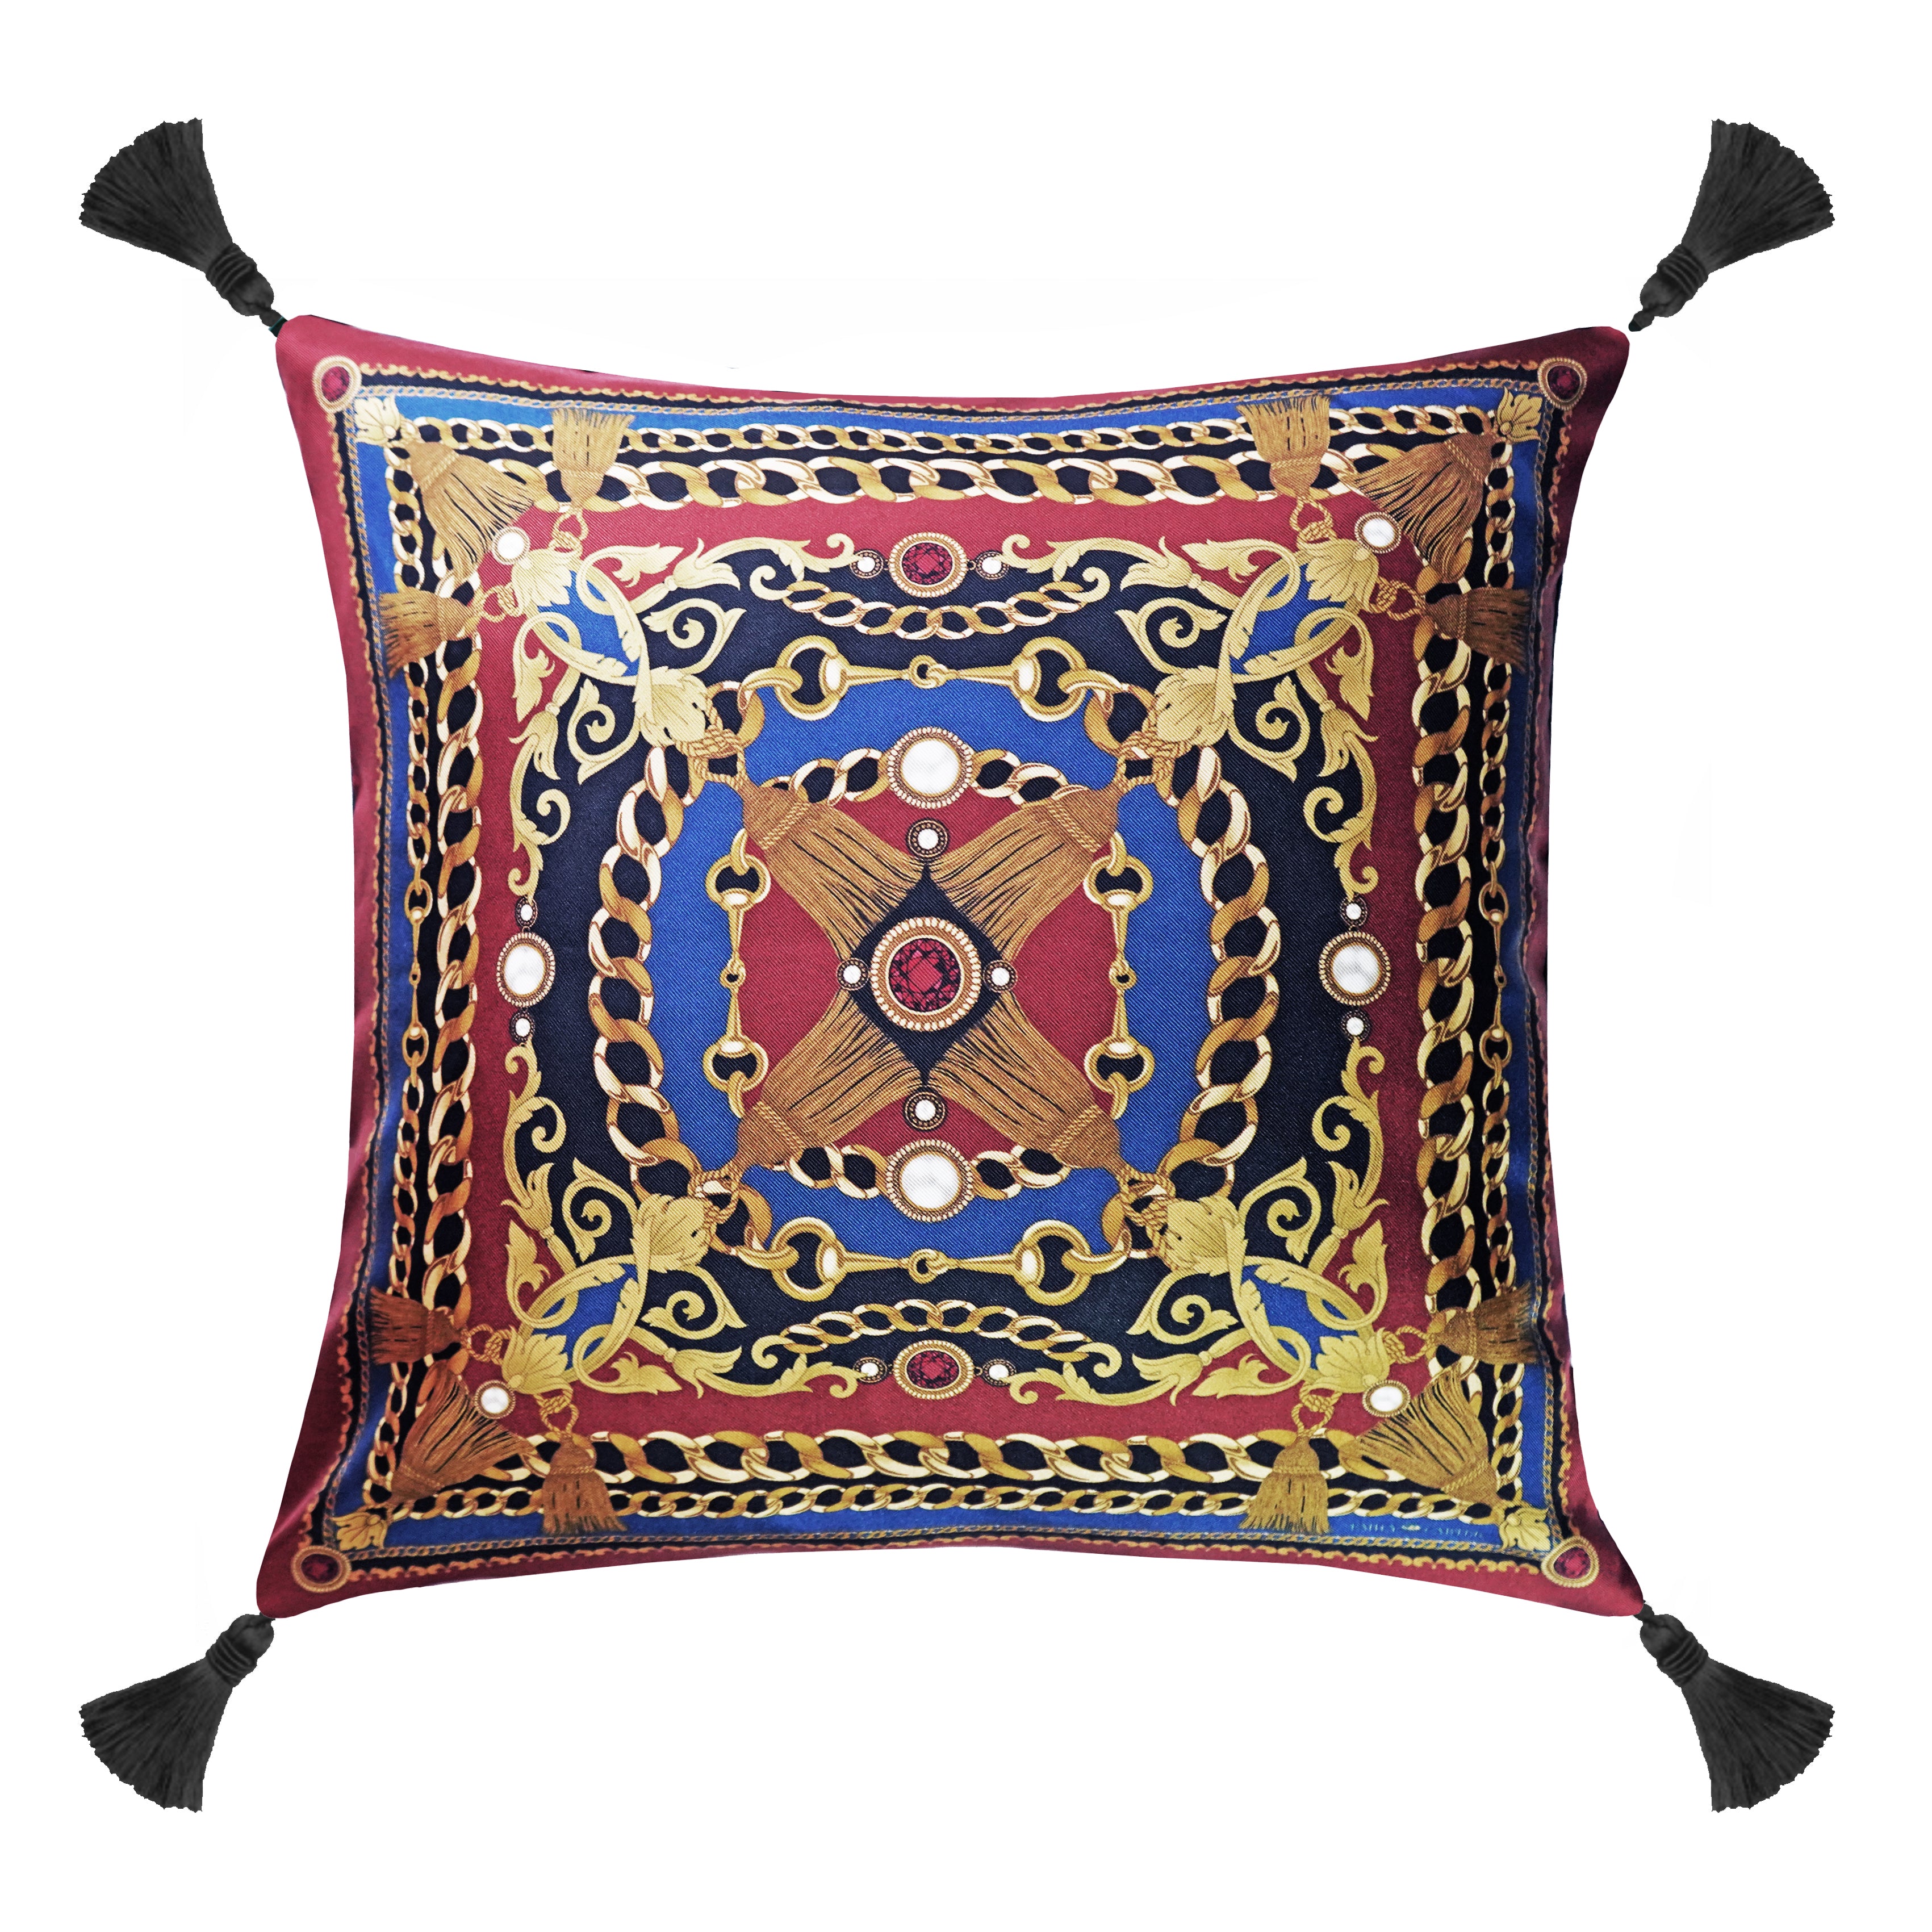 The Jewel & Chain Cushion | 45x45cm | Silk